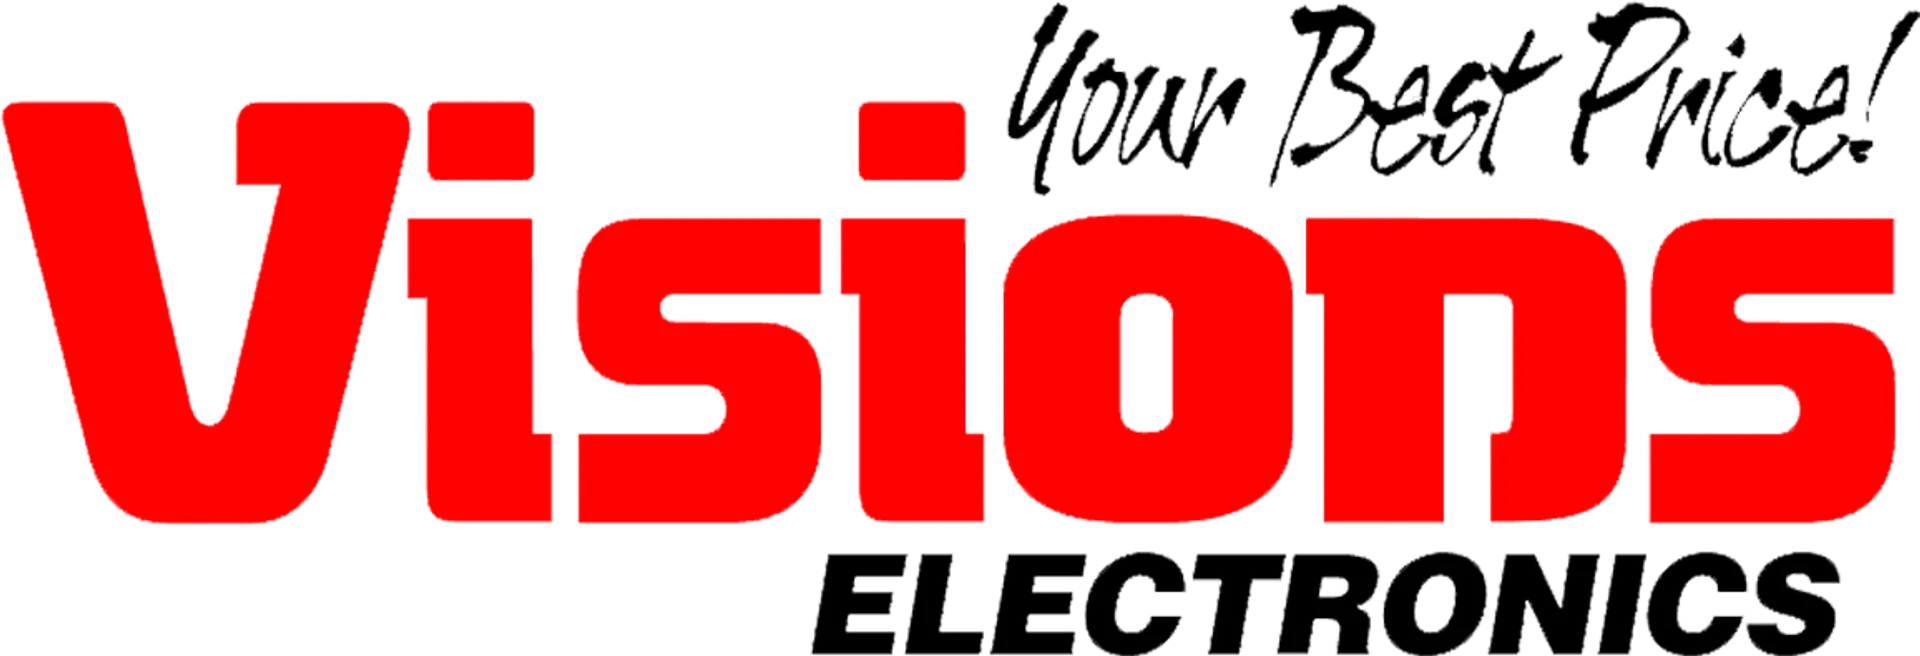 VISIONS ELECTRONICS logo